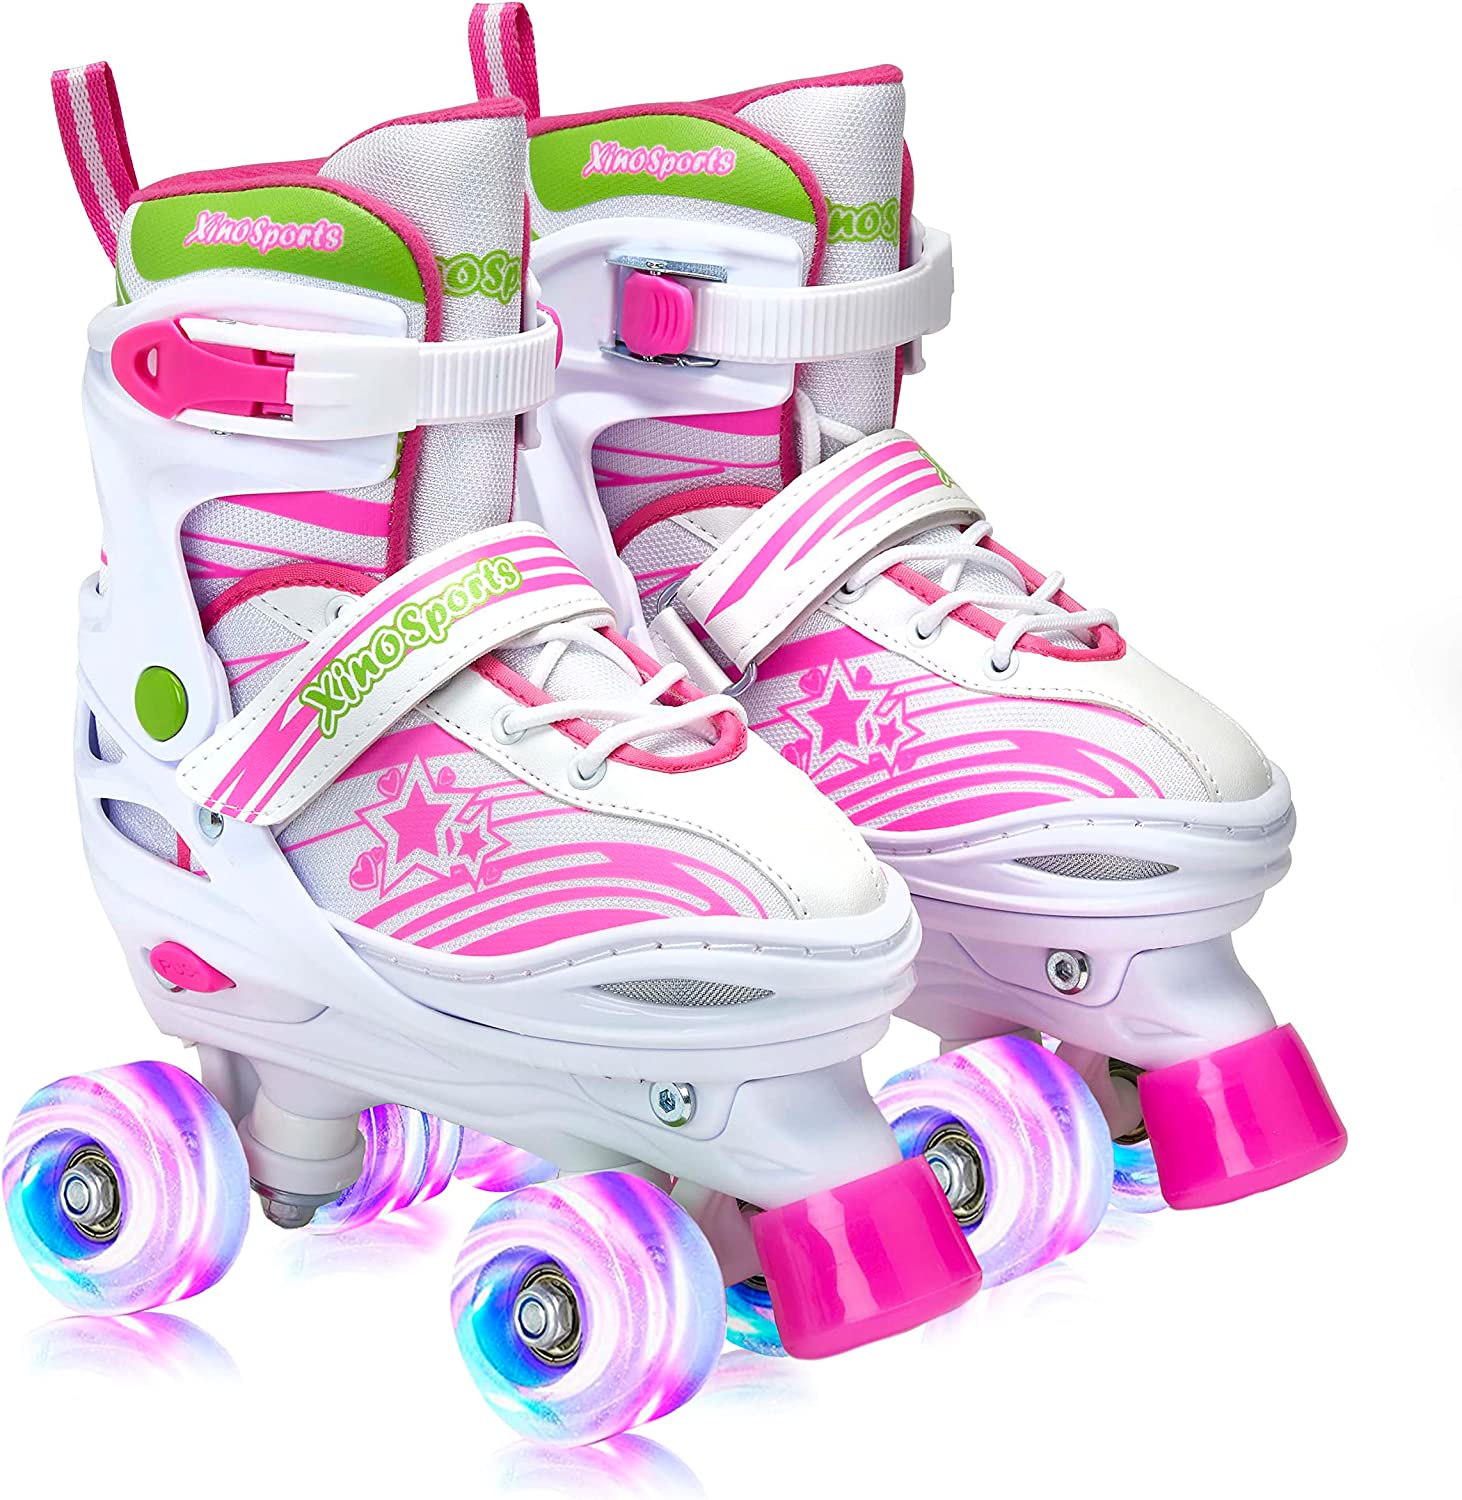 Roller Skates for Kids | Quality, Light-Up, Adjustable Skates | Xino Sports - Xino Sports